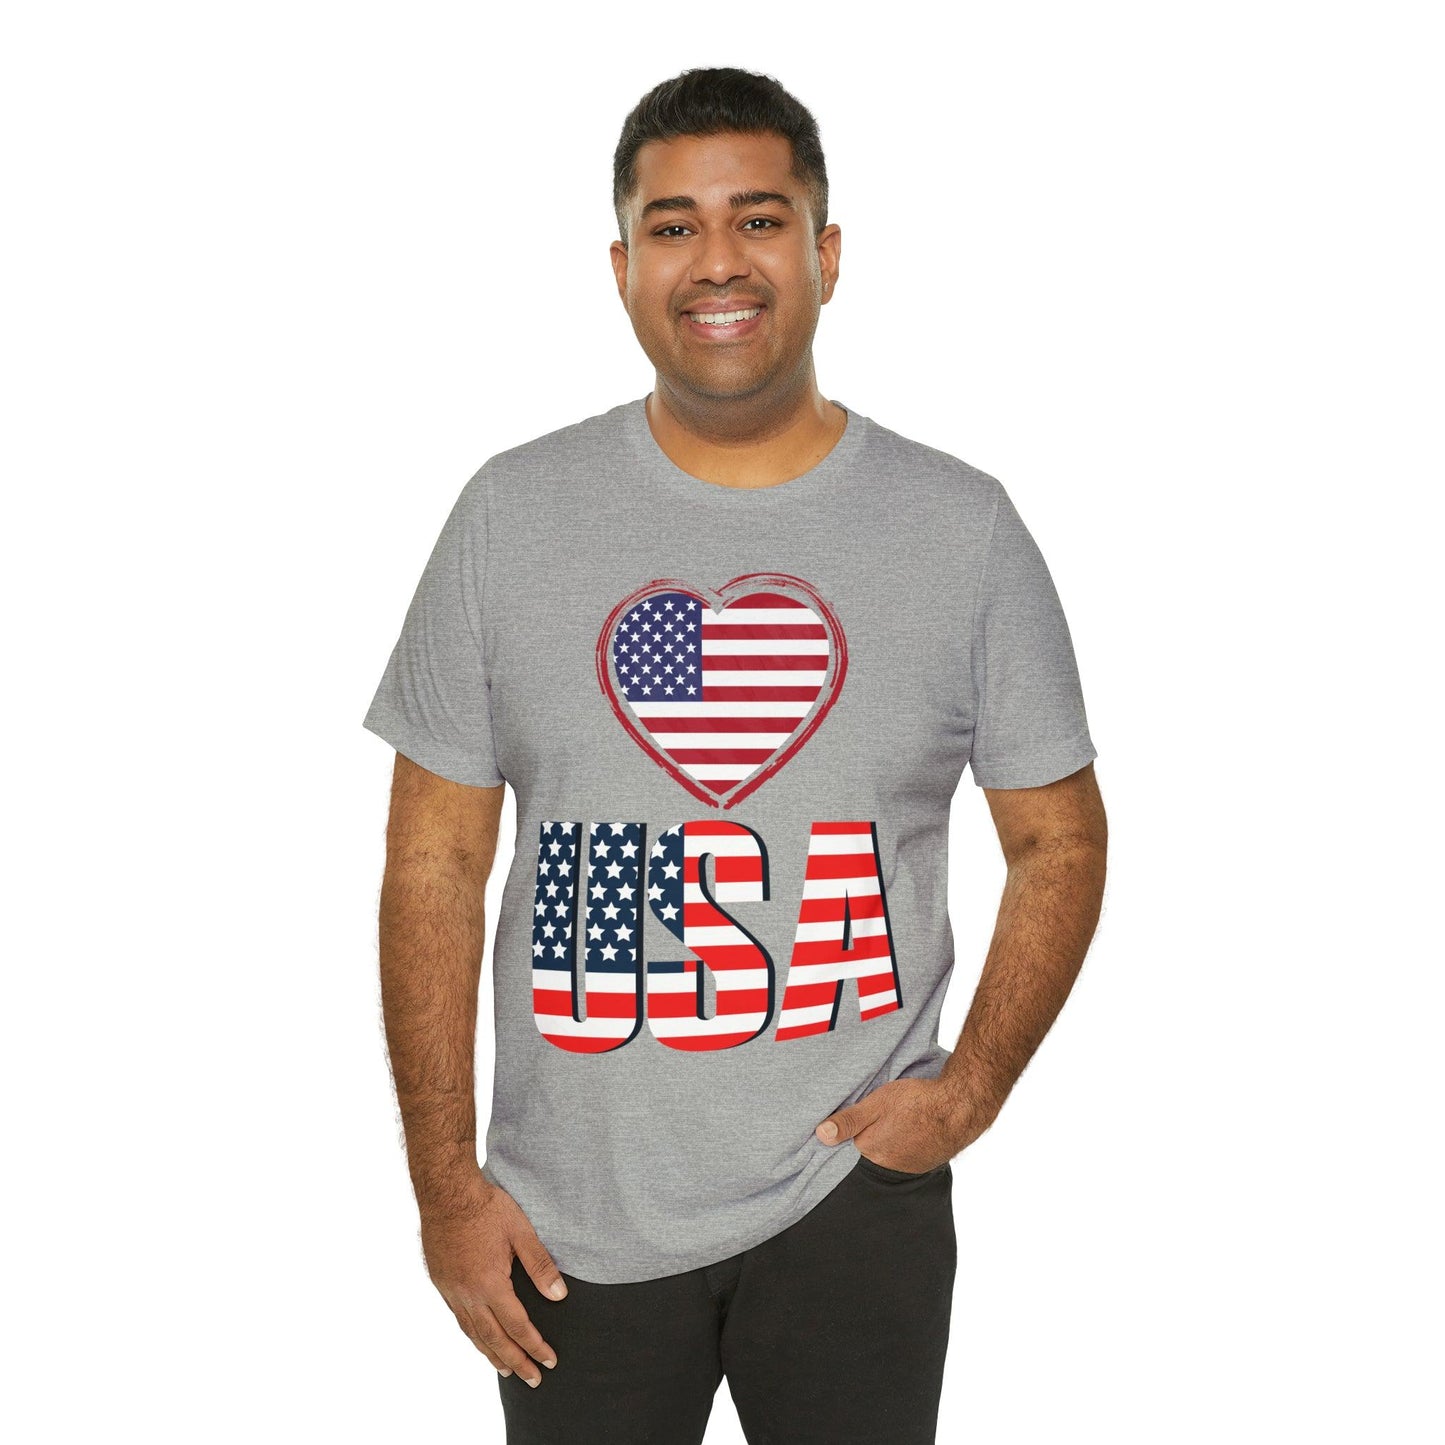 Heart Love USA shirt, American flag shirt, Red, white, and blue shirt,